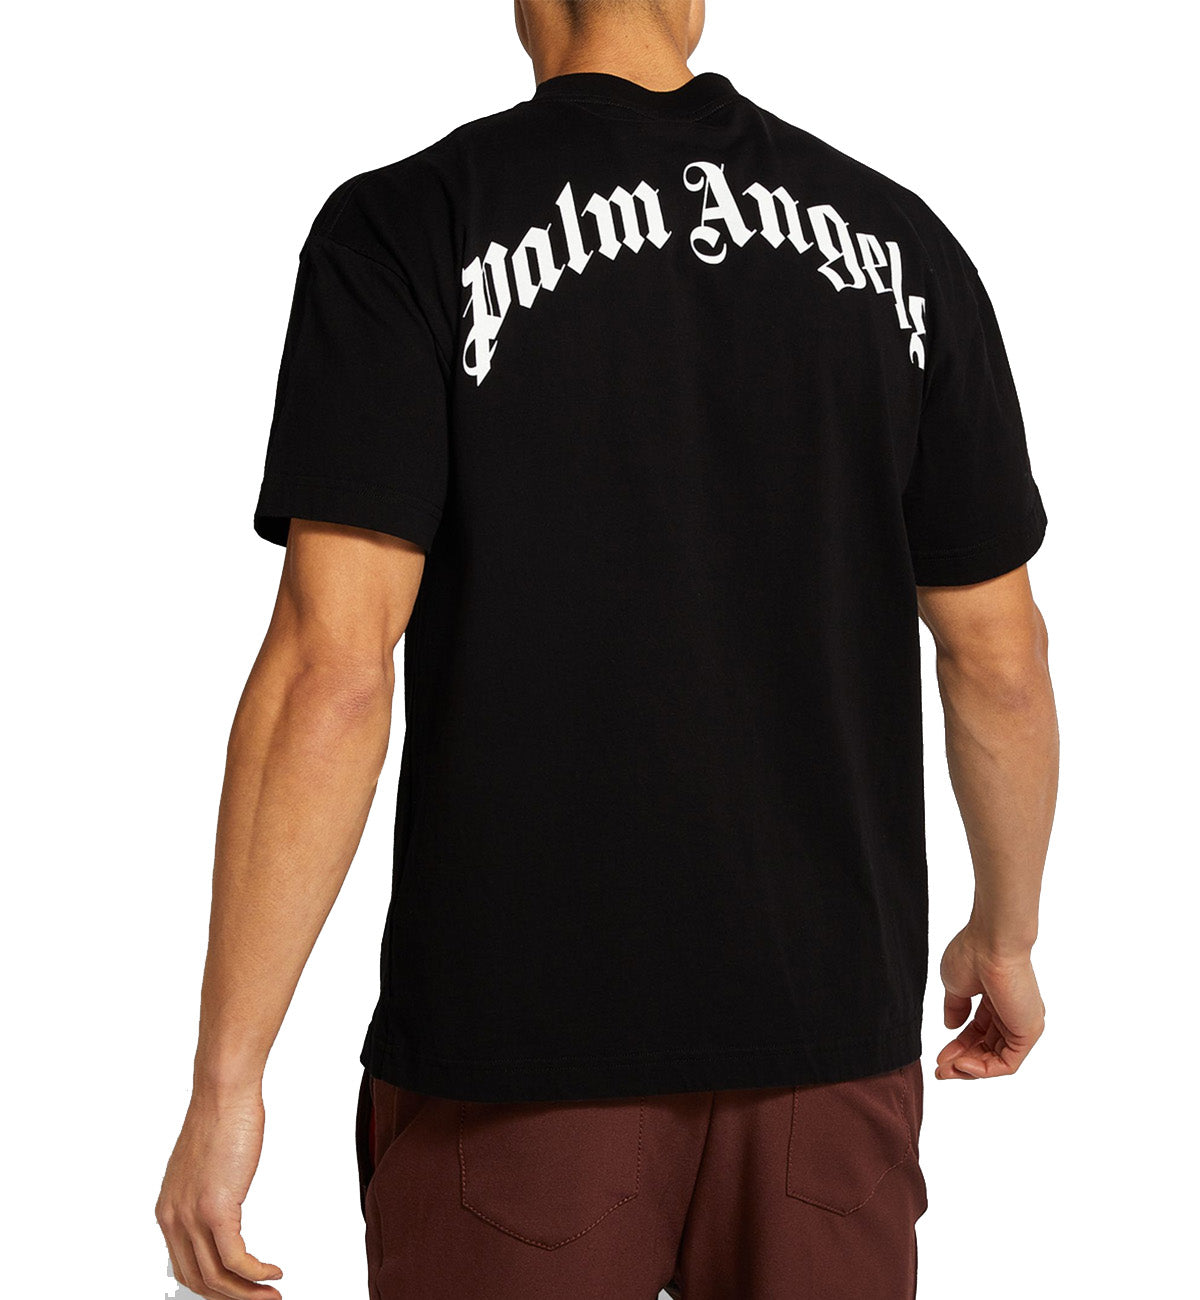 Palm Angels Croco T-Shirt (Black)